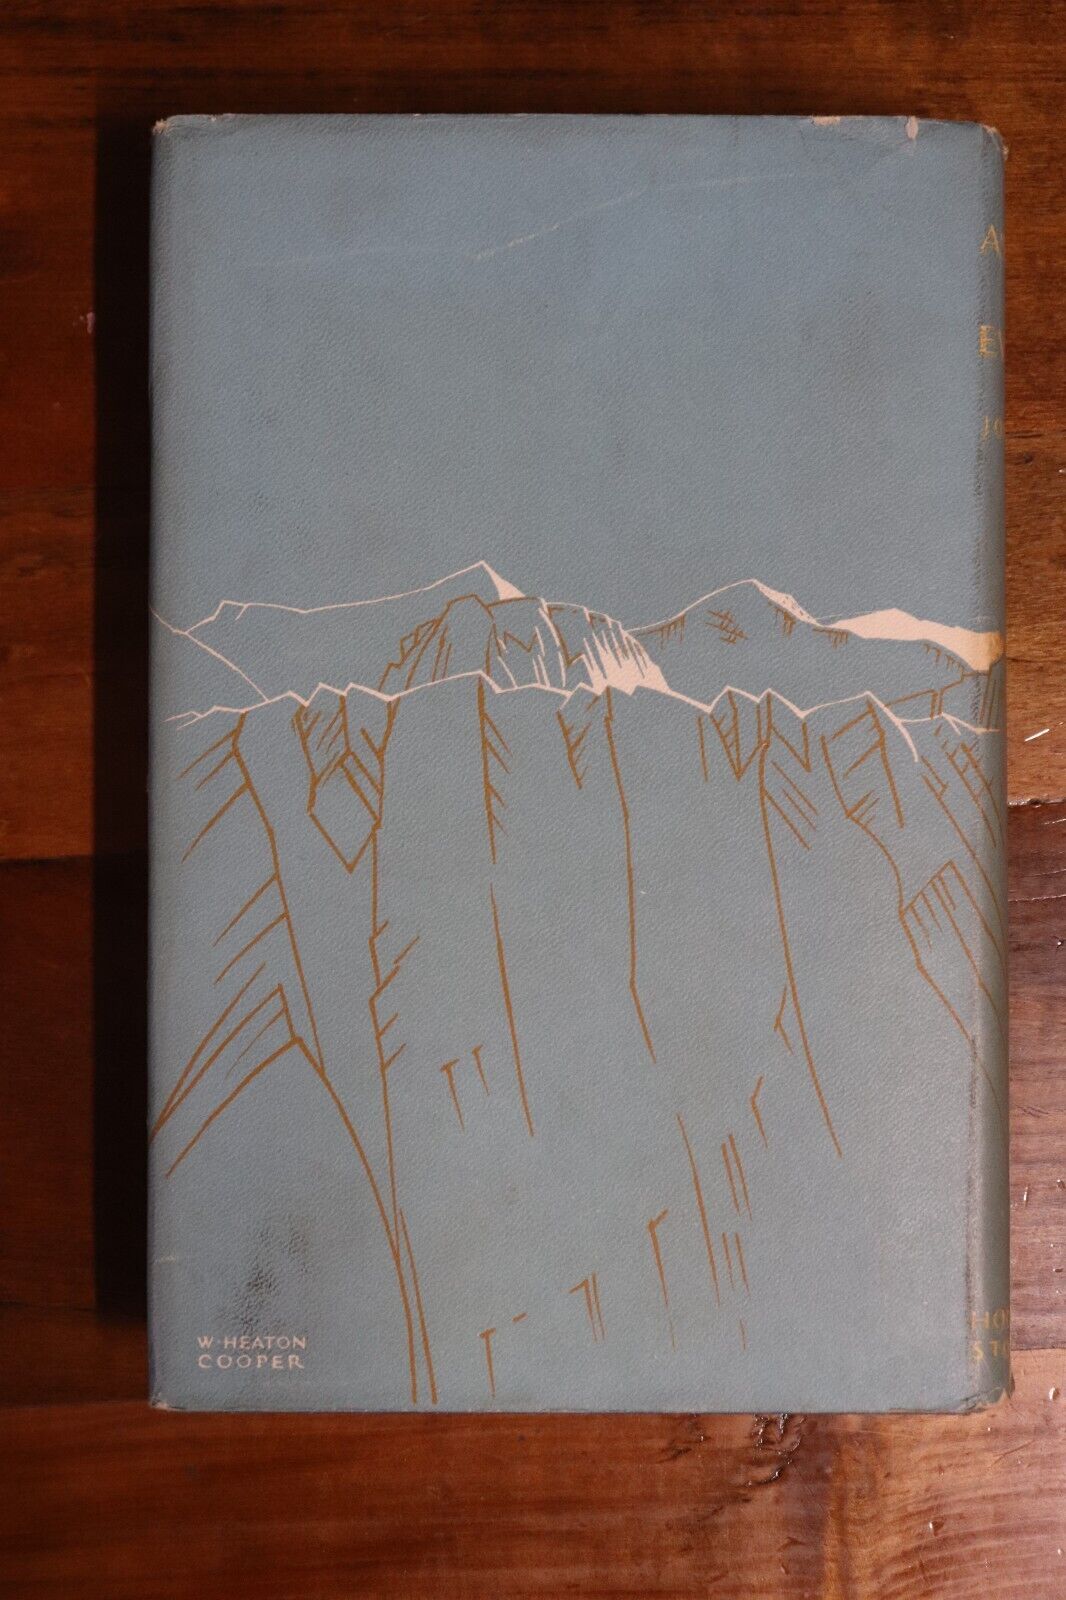 The Ascent Of Everest - 1954 - Vintage Exploration Book